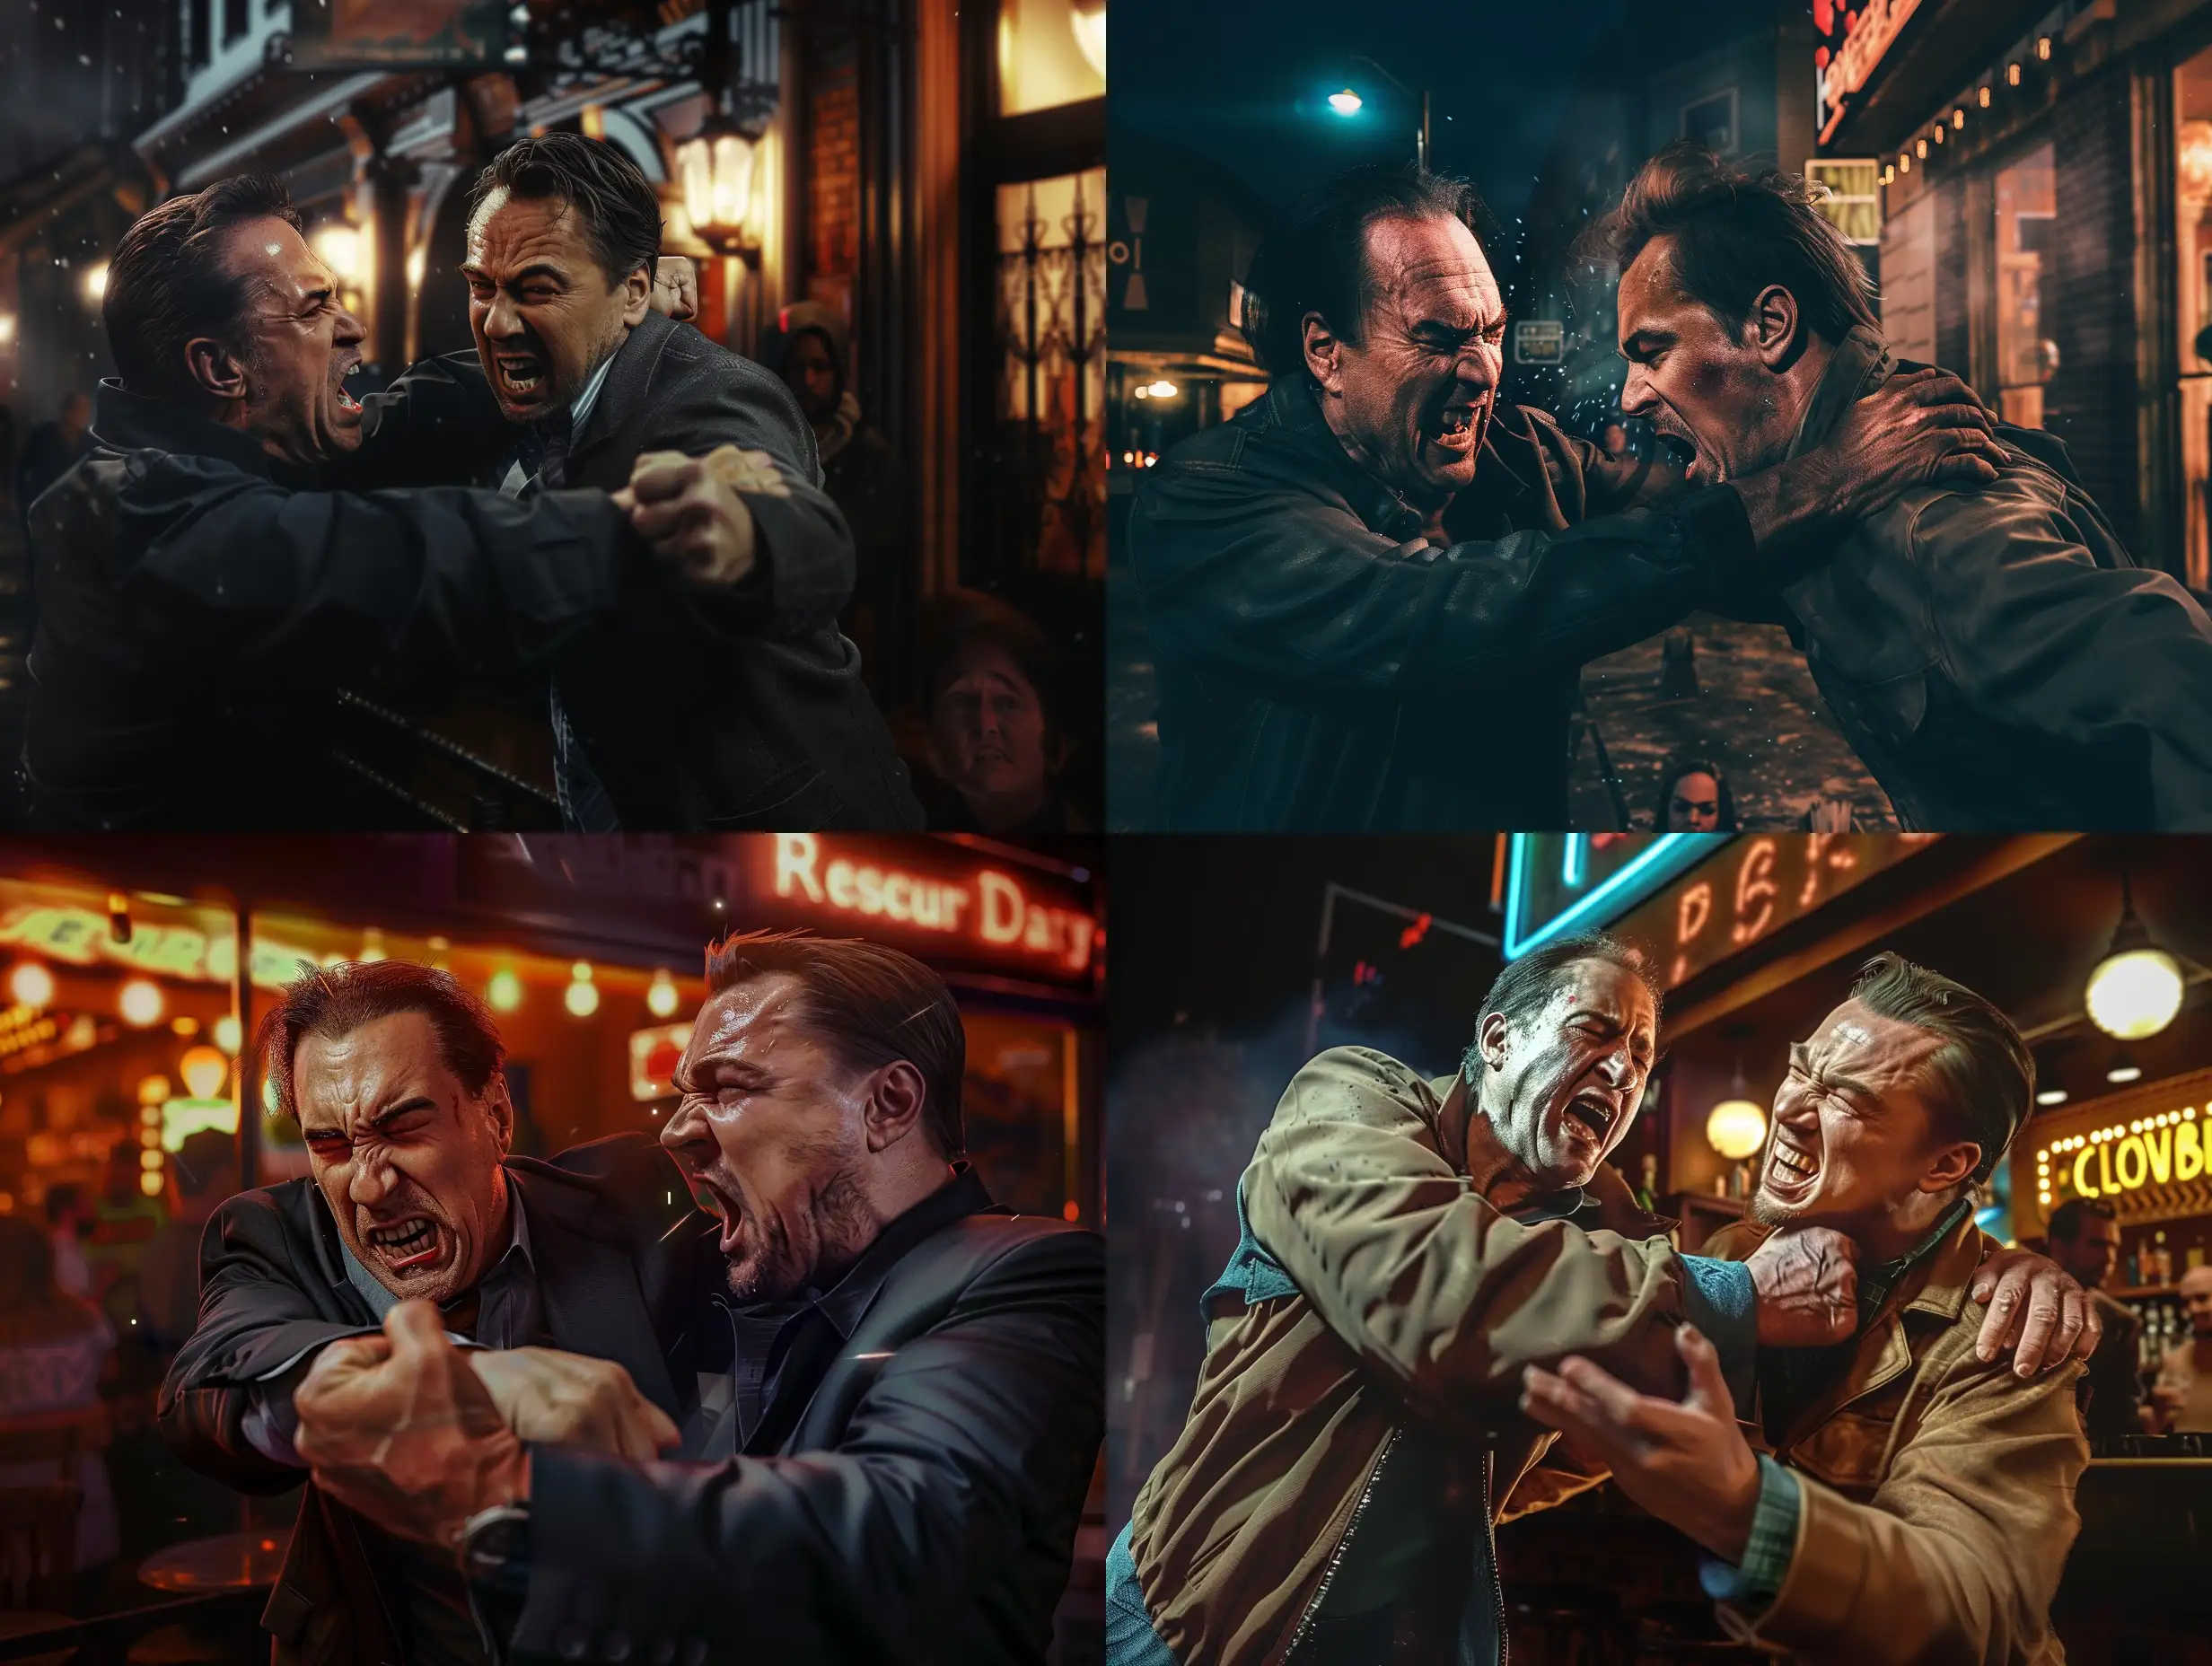 Intense-Nighttime-Confrontation-Nicolas-Cage-Confronts-Leonardo-DiCaprio-Outside-Bar